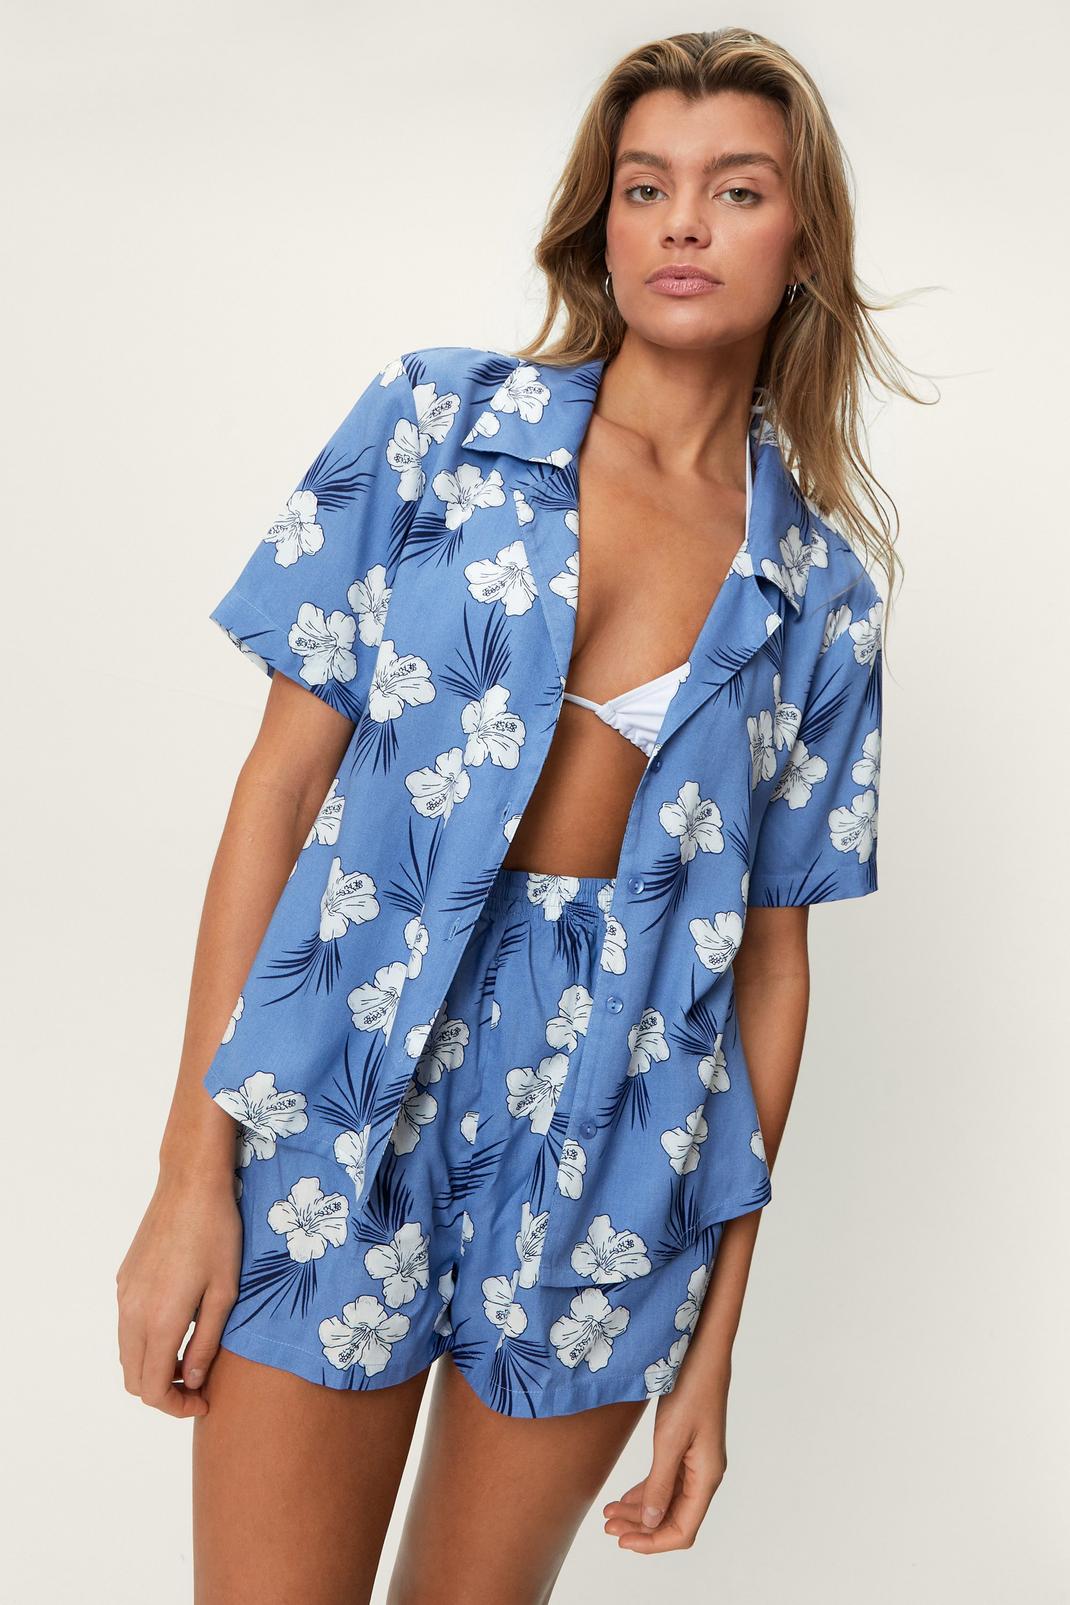 Blue Hawaiian Resort Shirt And Short Cover Up image number 1